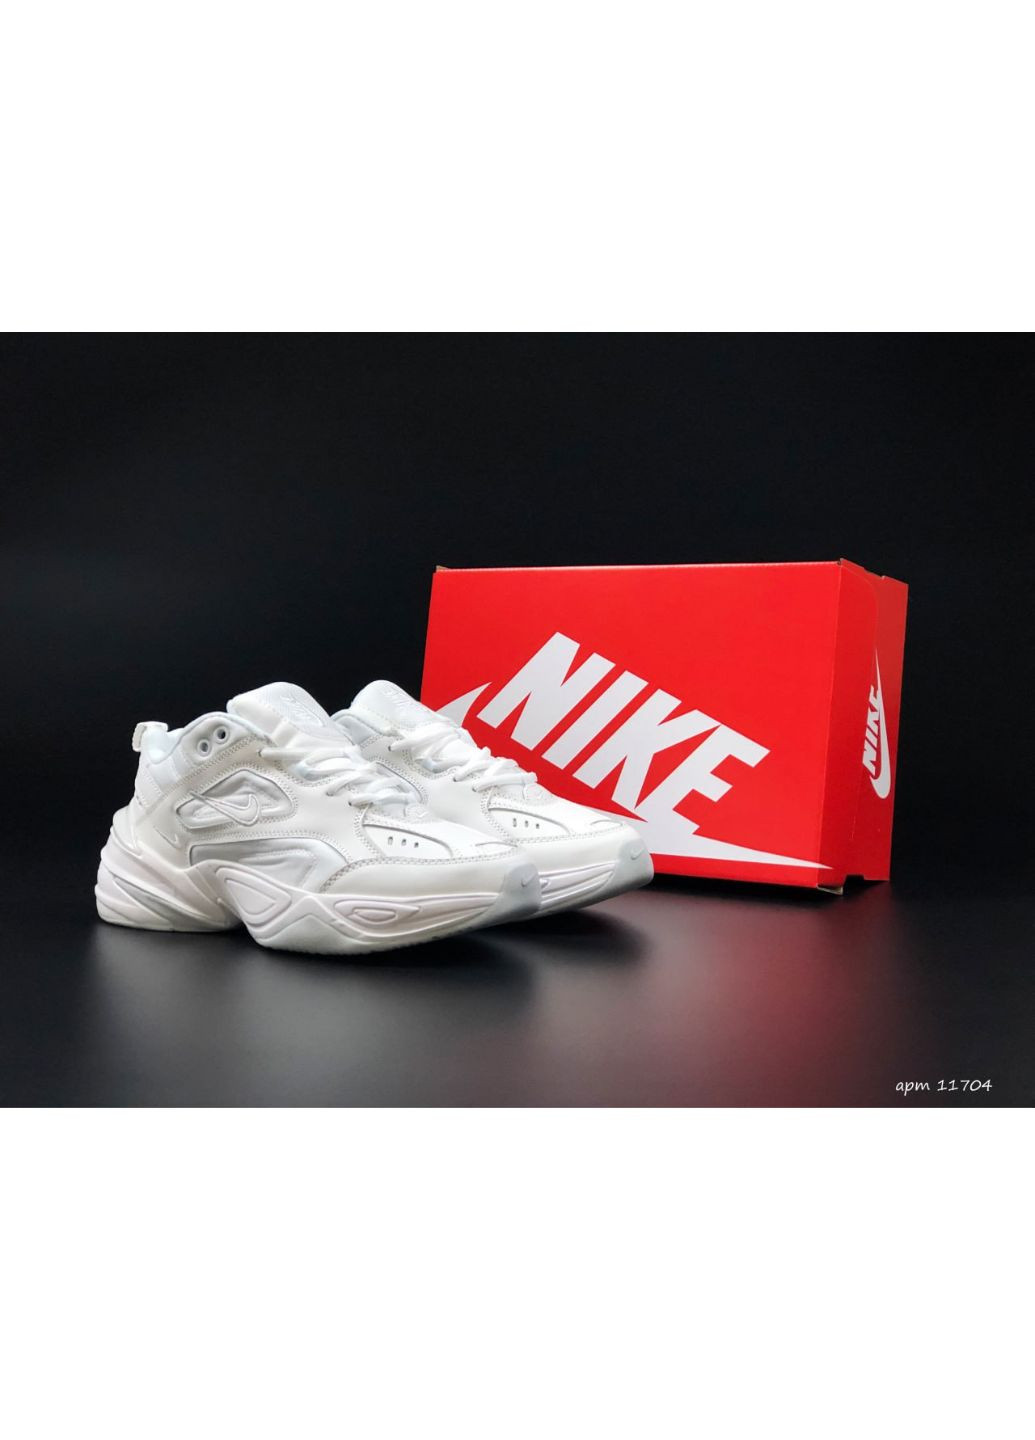 Белые демисезонные мужские кроссовки белые «no name» Nike M2k Tekno